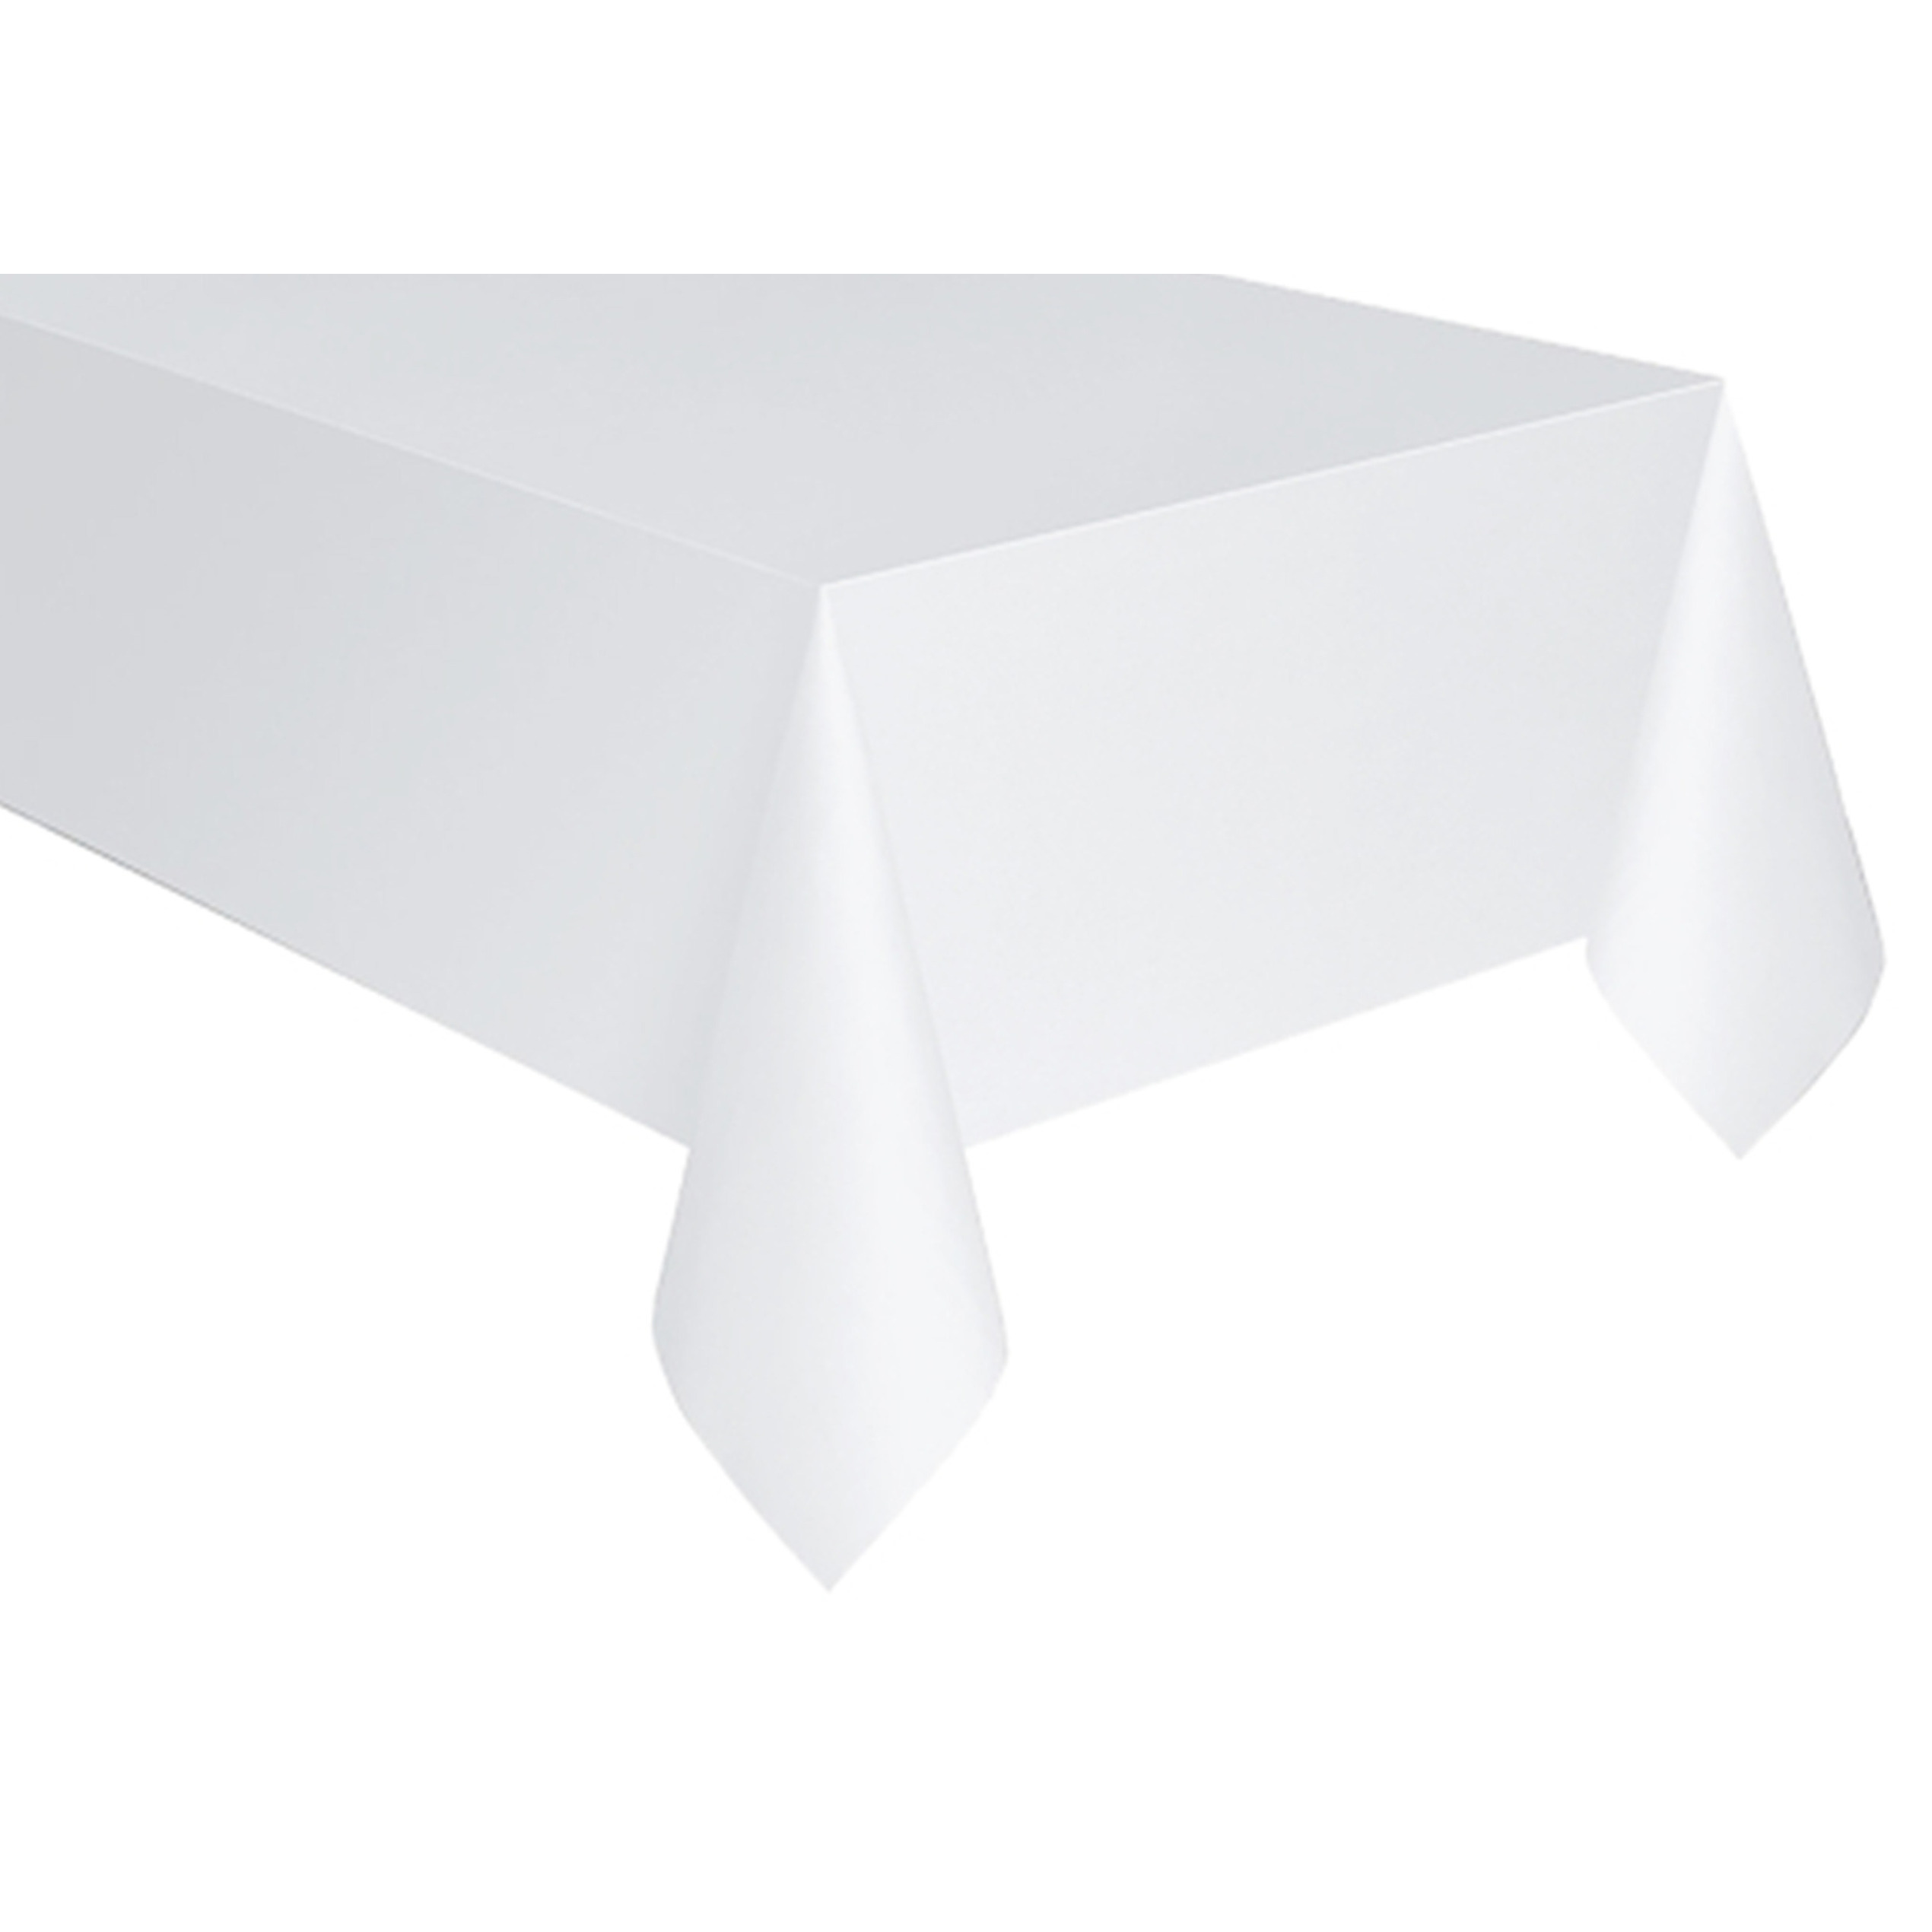 Tafelkleed-tafellaken wit 180 x 300 cm polyester Bruiloft tafelkleden